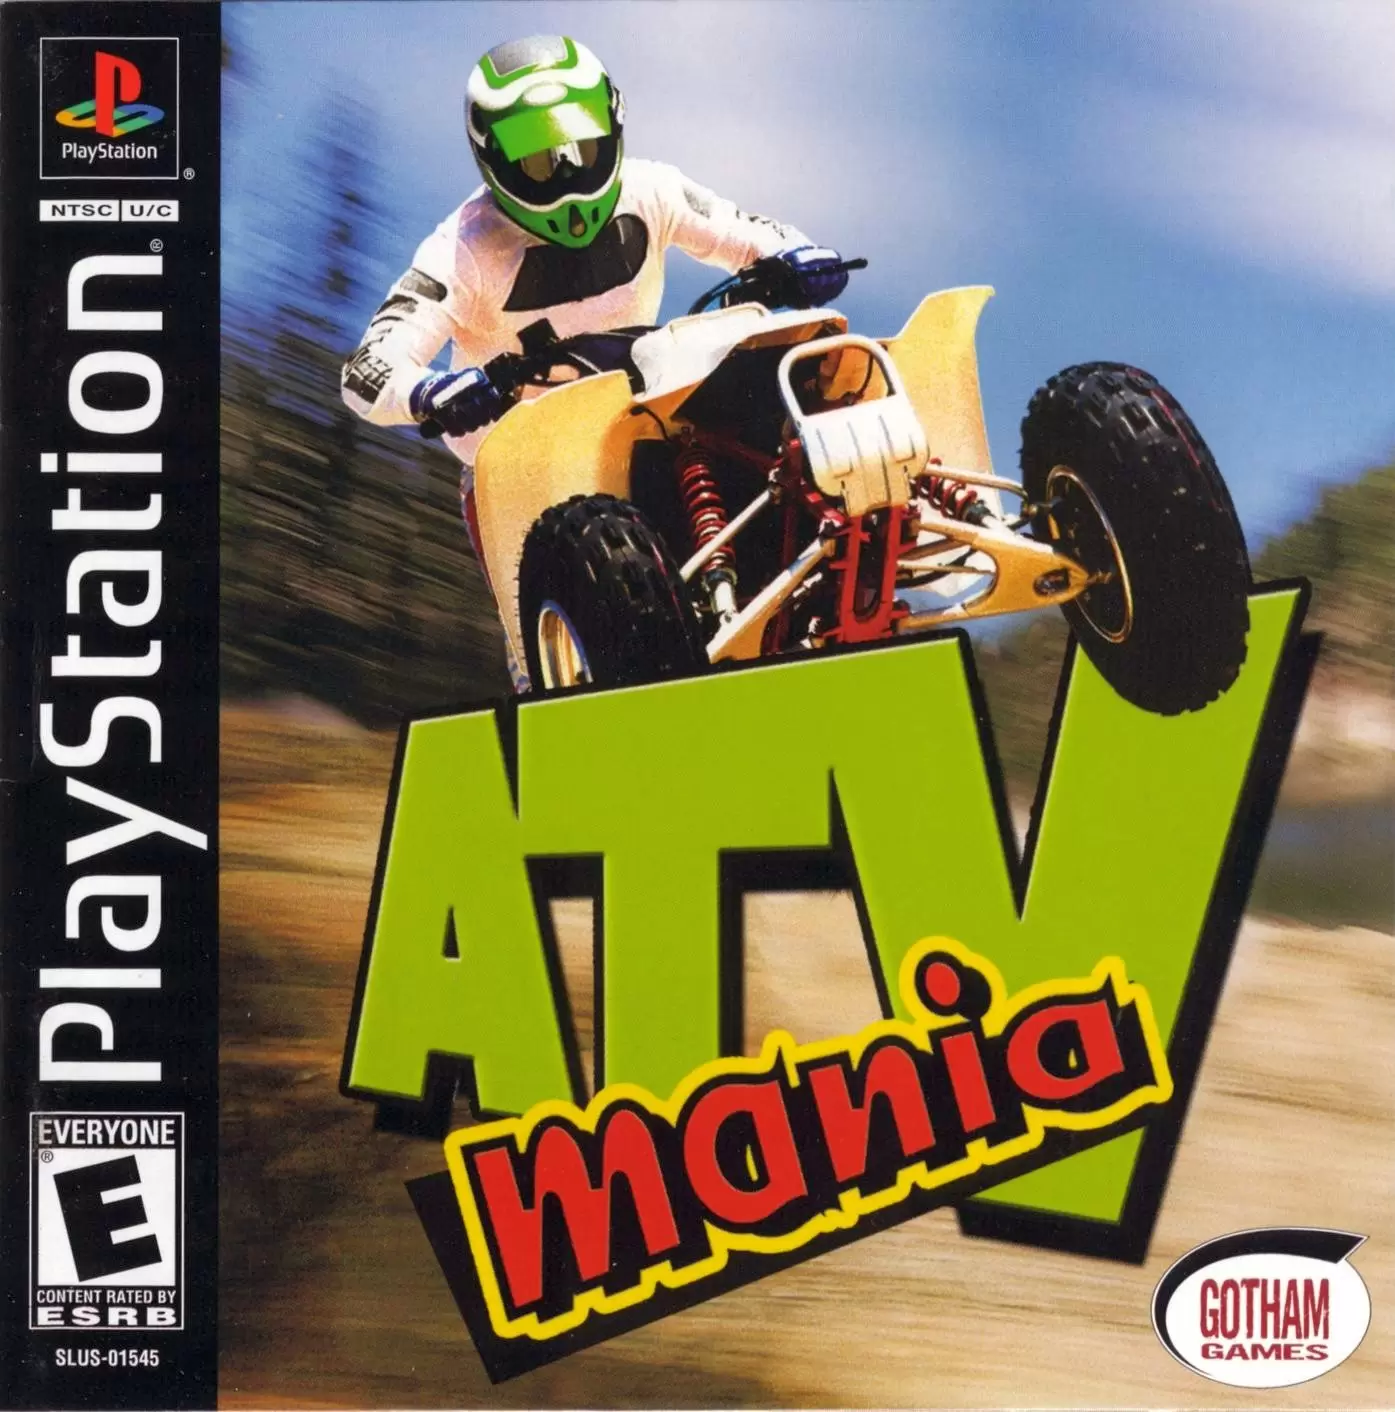 Playstation games - ATV Mania